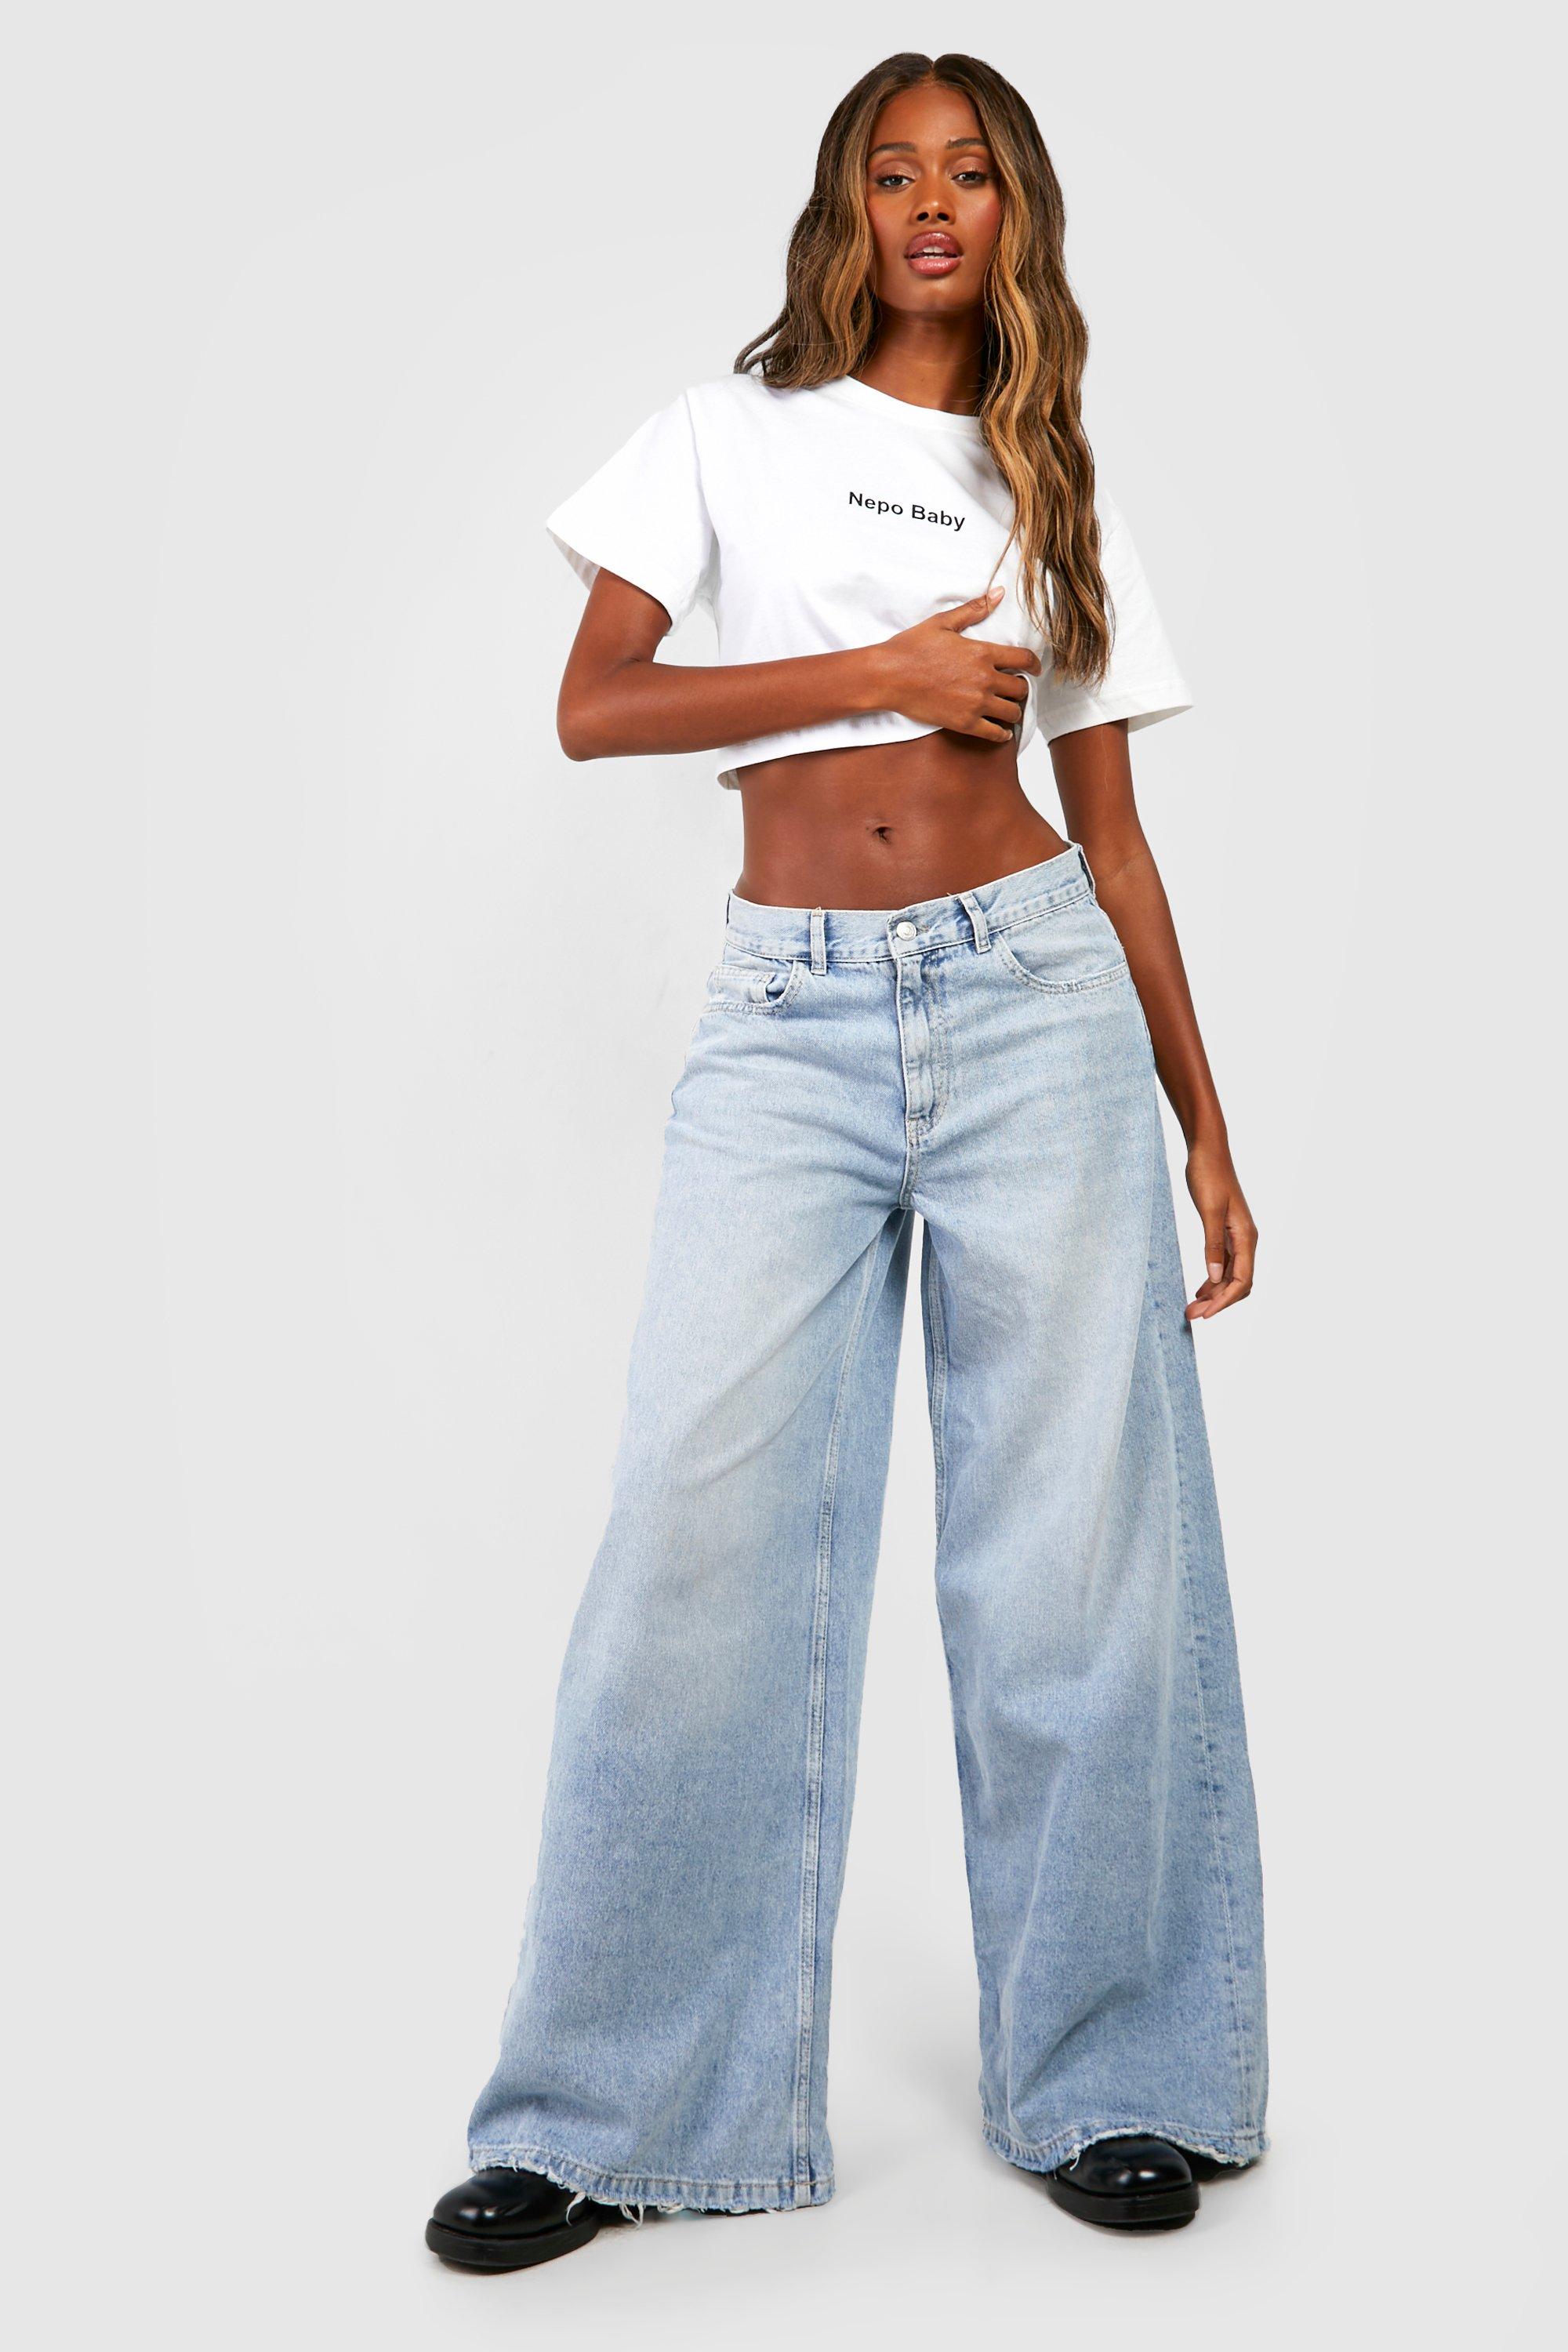 https://media.boohoo.com/i/boohoo/gzz73147_vintage%20wash_xl_2/female-vintage%20wash-palazzo-wide-leg-mid-rise-jeans